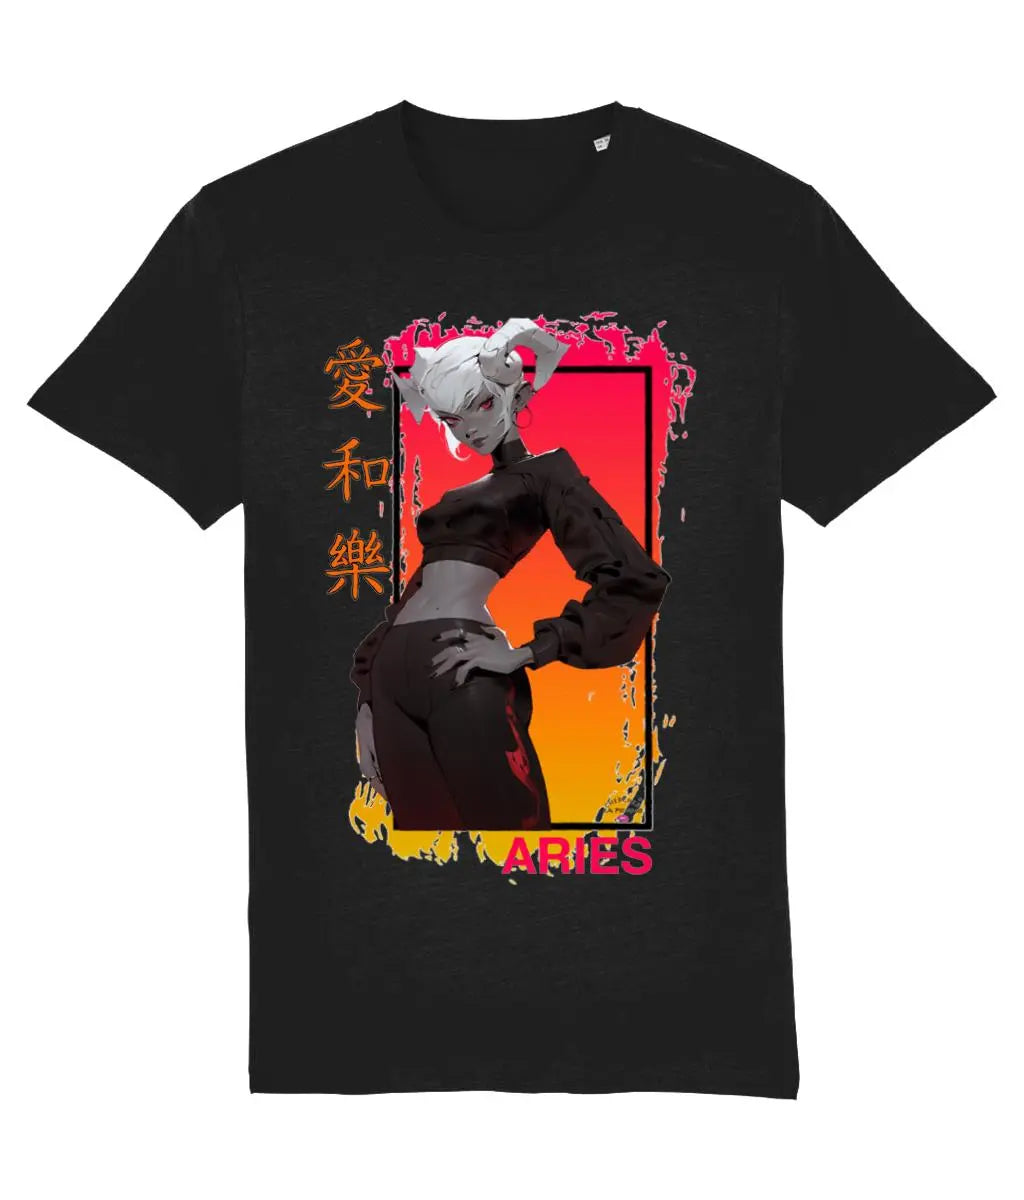 Aries Anime Inspired Organic T-Shirt Cherchez La Femme brand